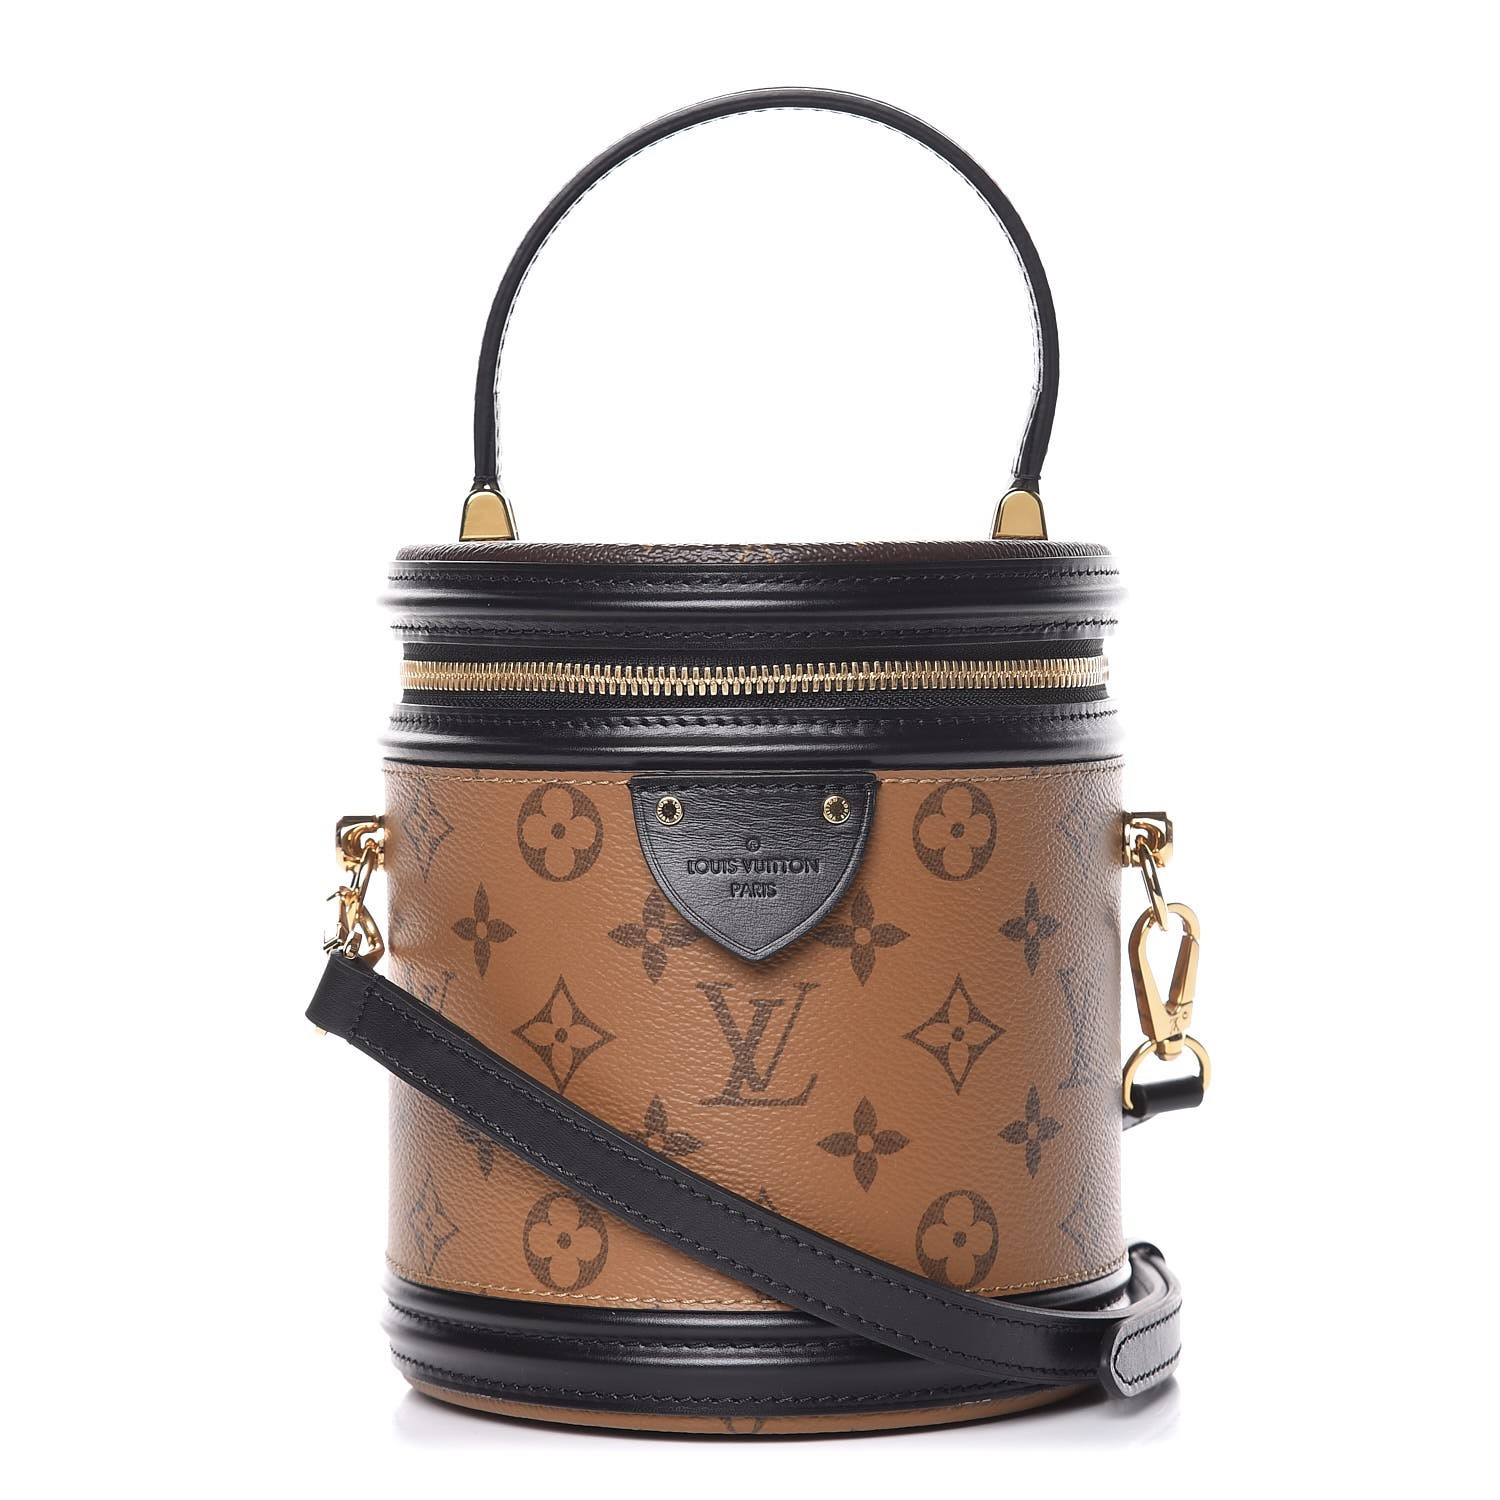 Where to Buy the Louis Vuitton Cannes Bag - A Vintage Splendor